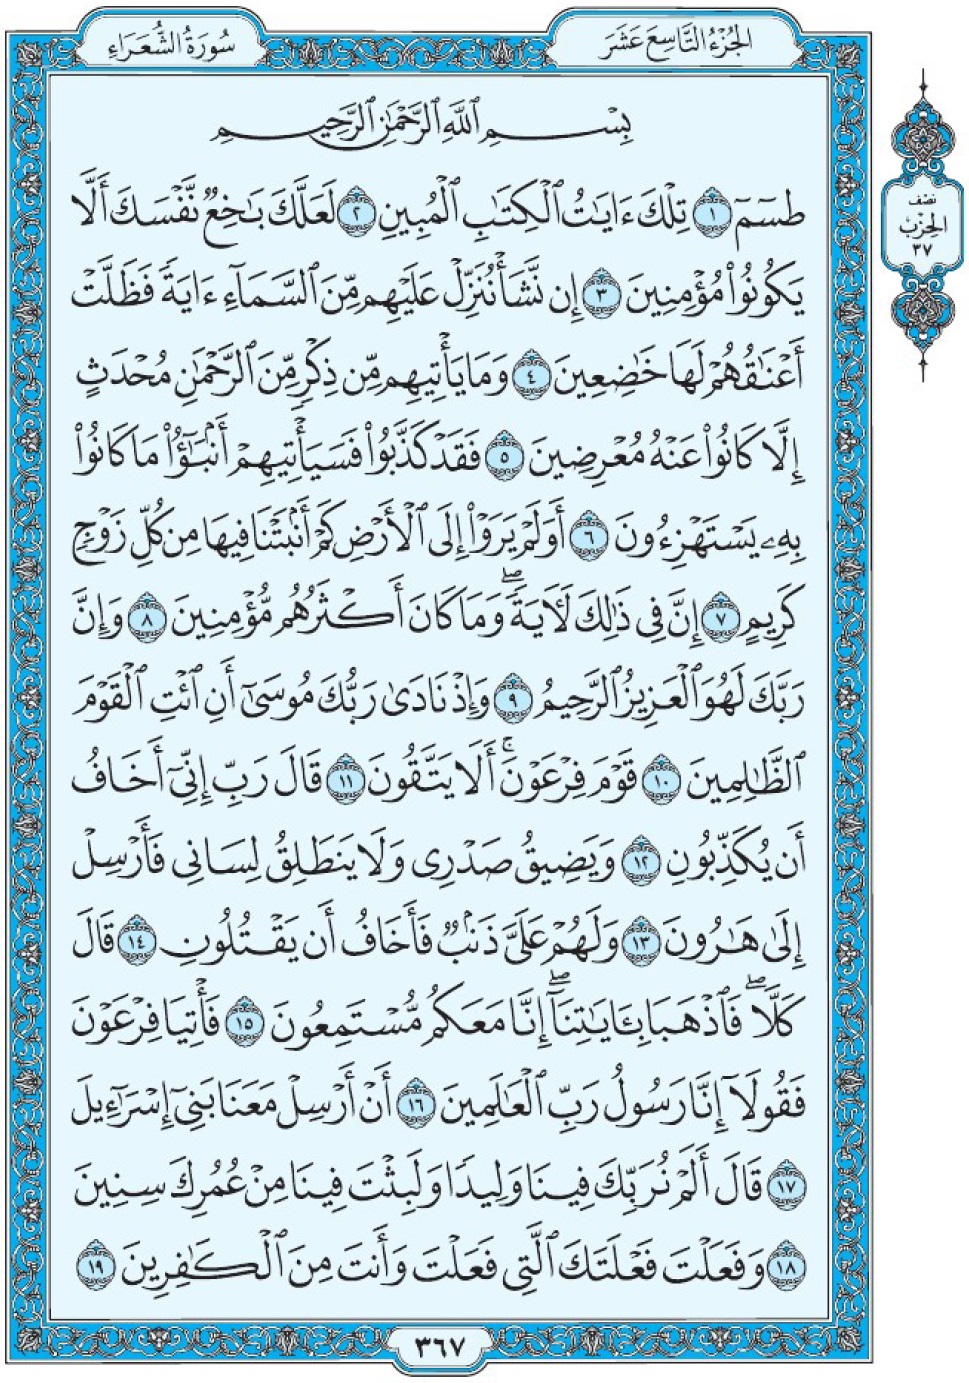 Коран Мединский мусхаф страница 367, сура 26 Ащ-Щу‘араъ سورة ٢٦ الشعراء 